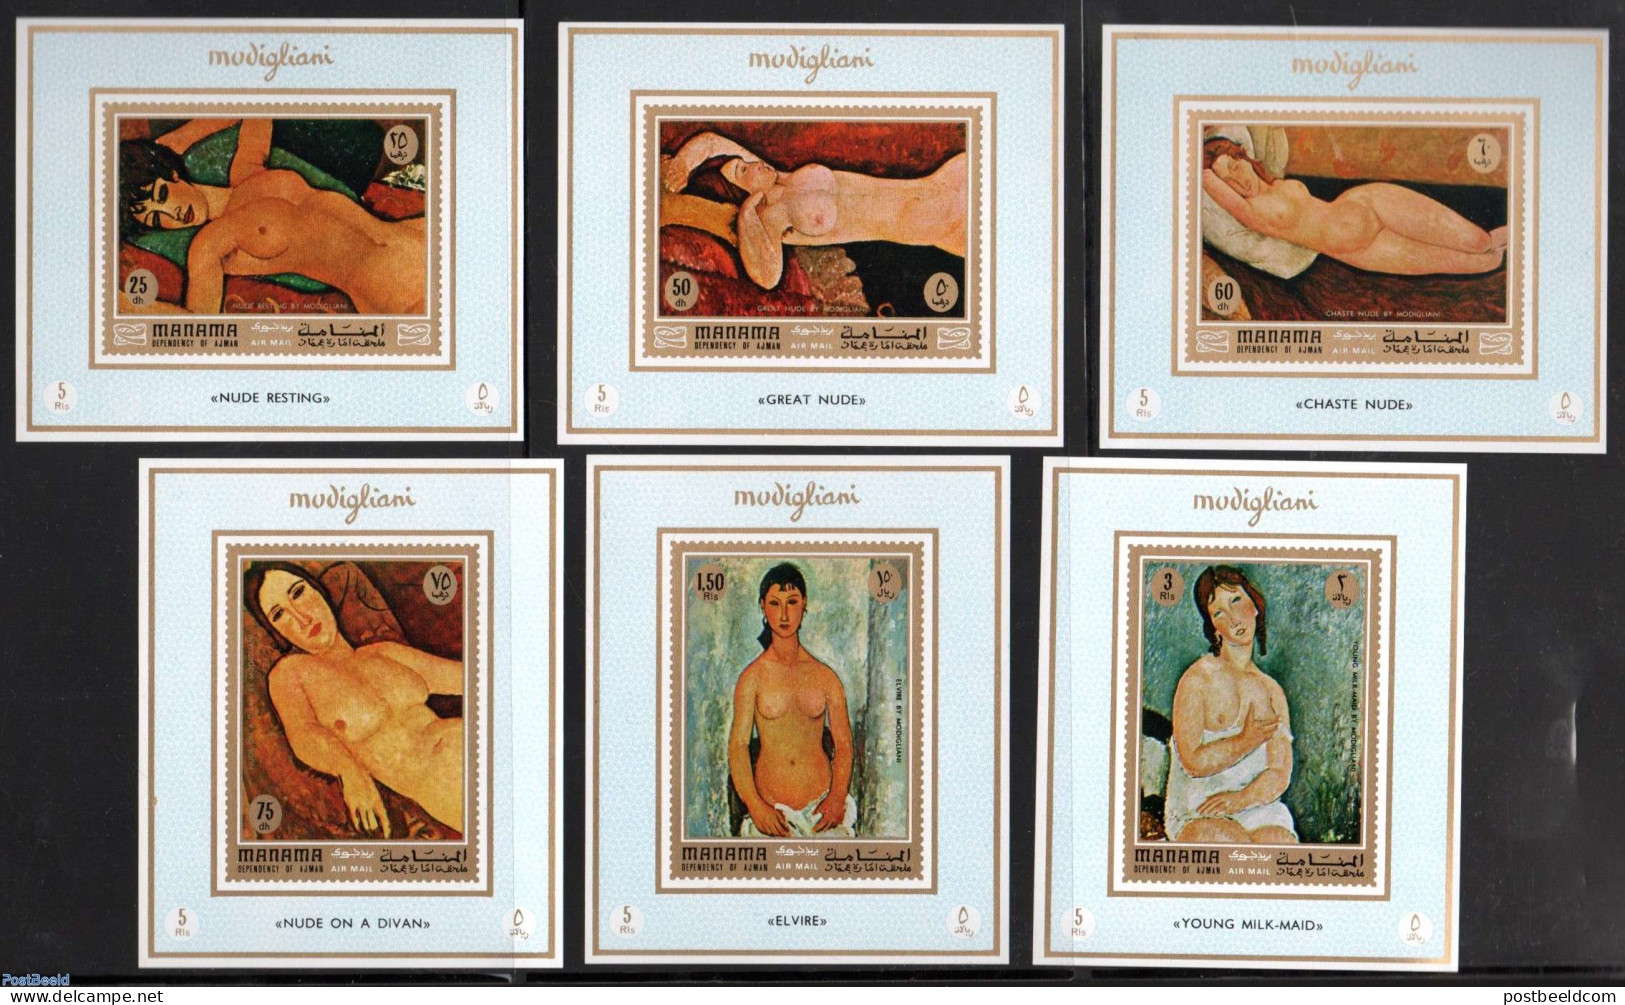 Manama 1971 Modigliani Paintings 6 S/s, Mint NH, Art - Amedeo Modigliani - Nude Paintings - Paintings - Manama